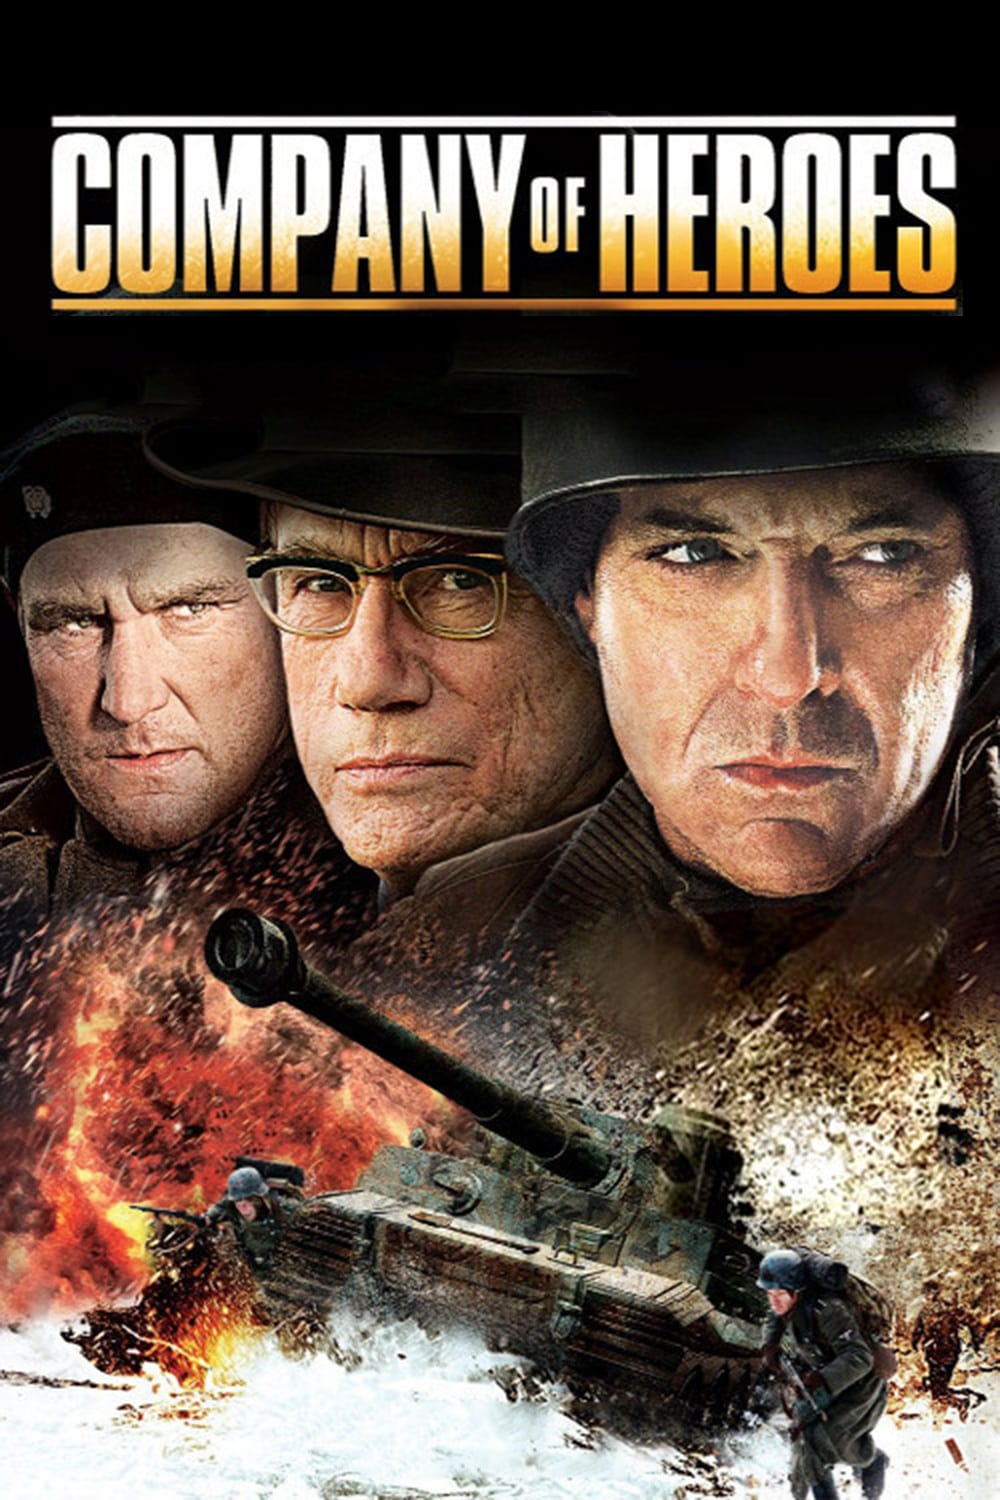 Plakat von "Company of Heroes"